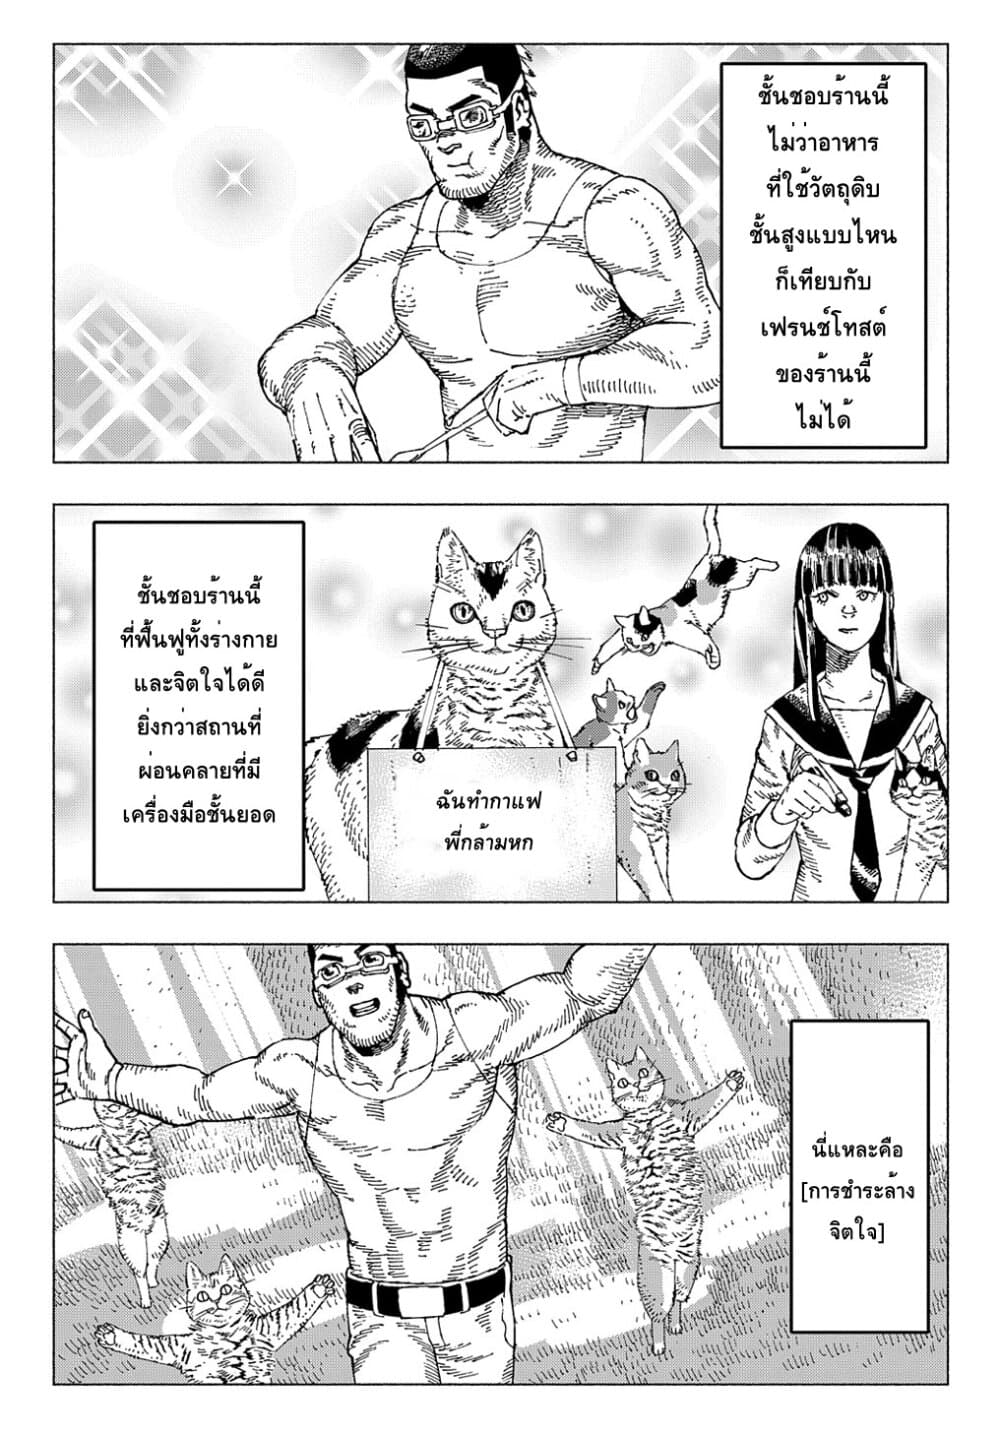 Nyaight of the Living Cat ซอมบี้เหมียวครองโลก! 4.5-Extra Edition : Tanishi